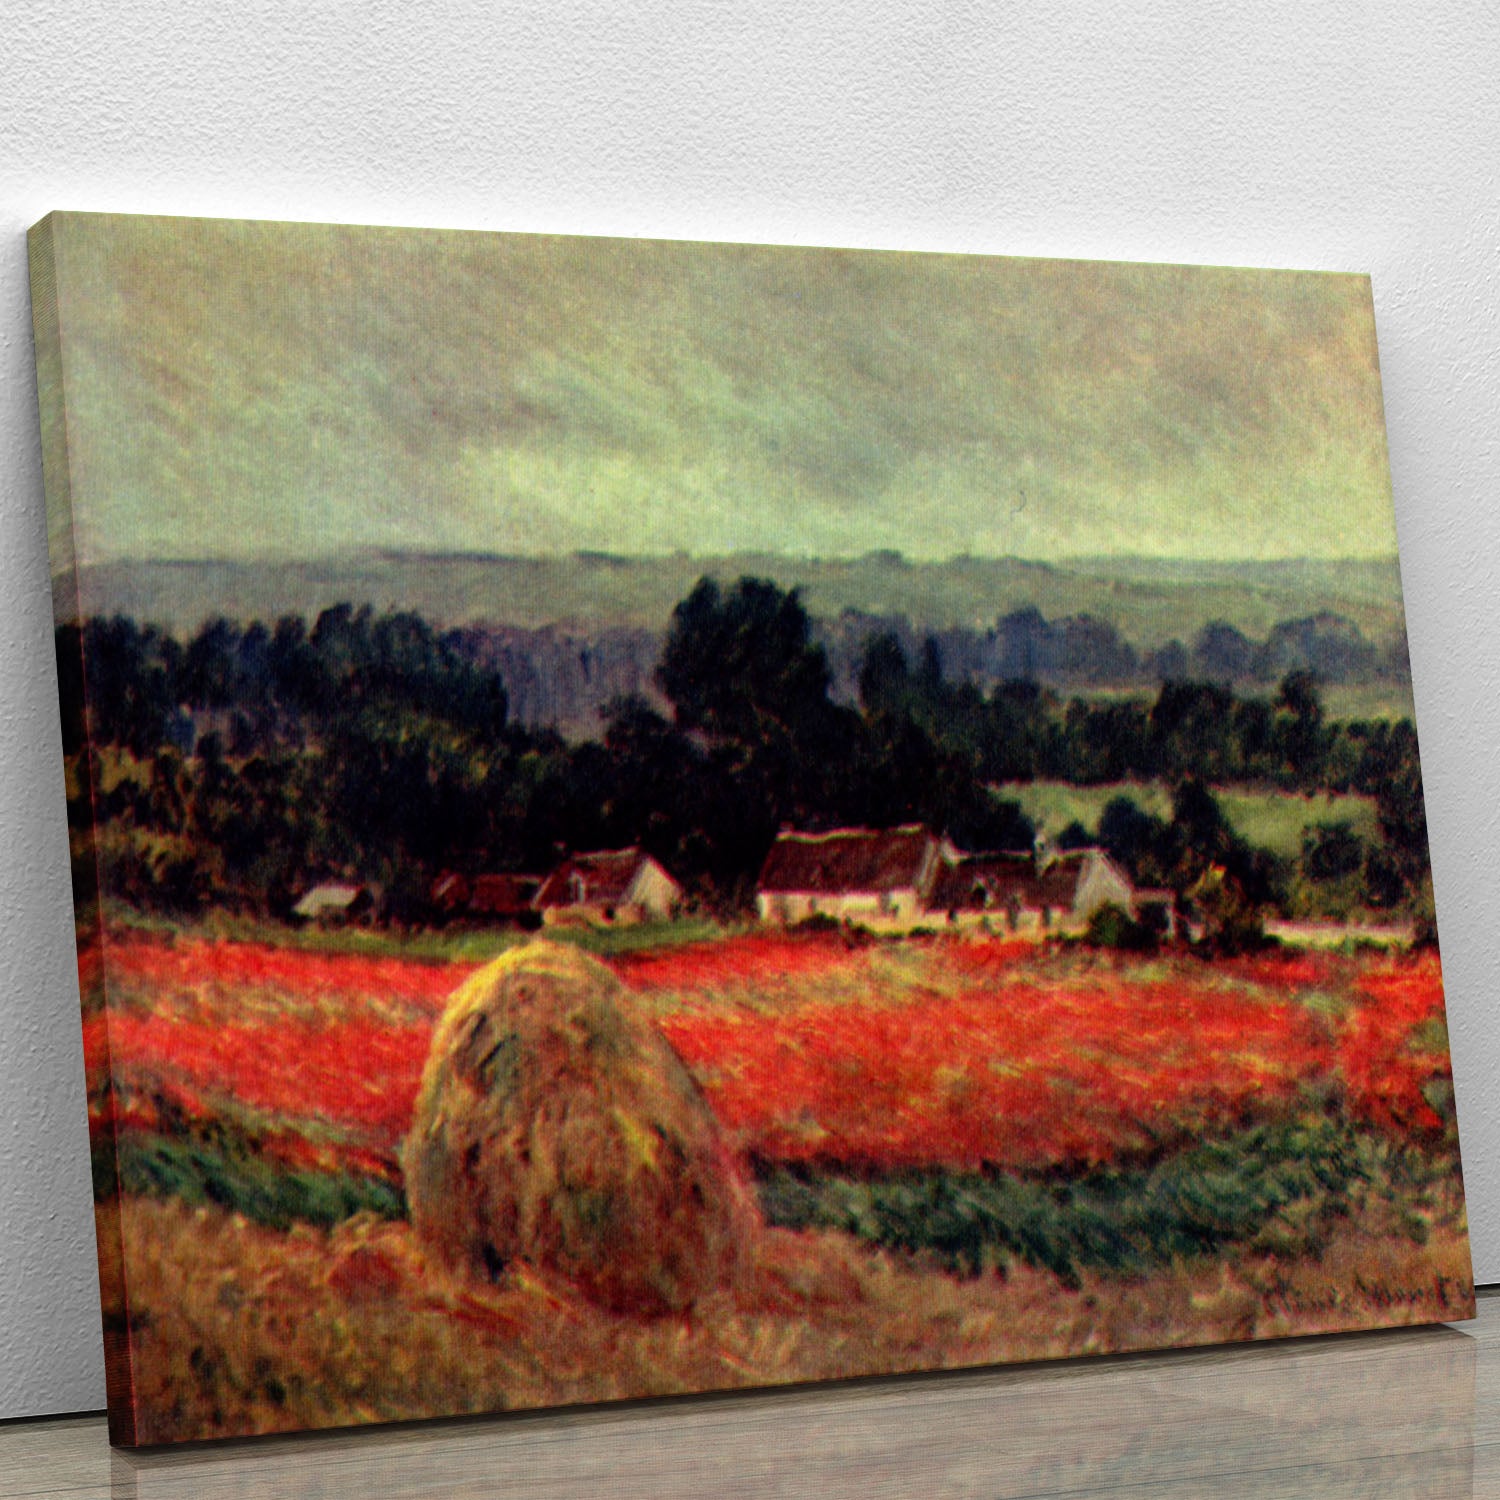 The poppy Blumenfeld The barn by Monet Canvas Print or Poster - Canvas Art Rocks - 1